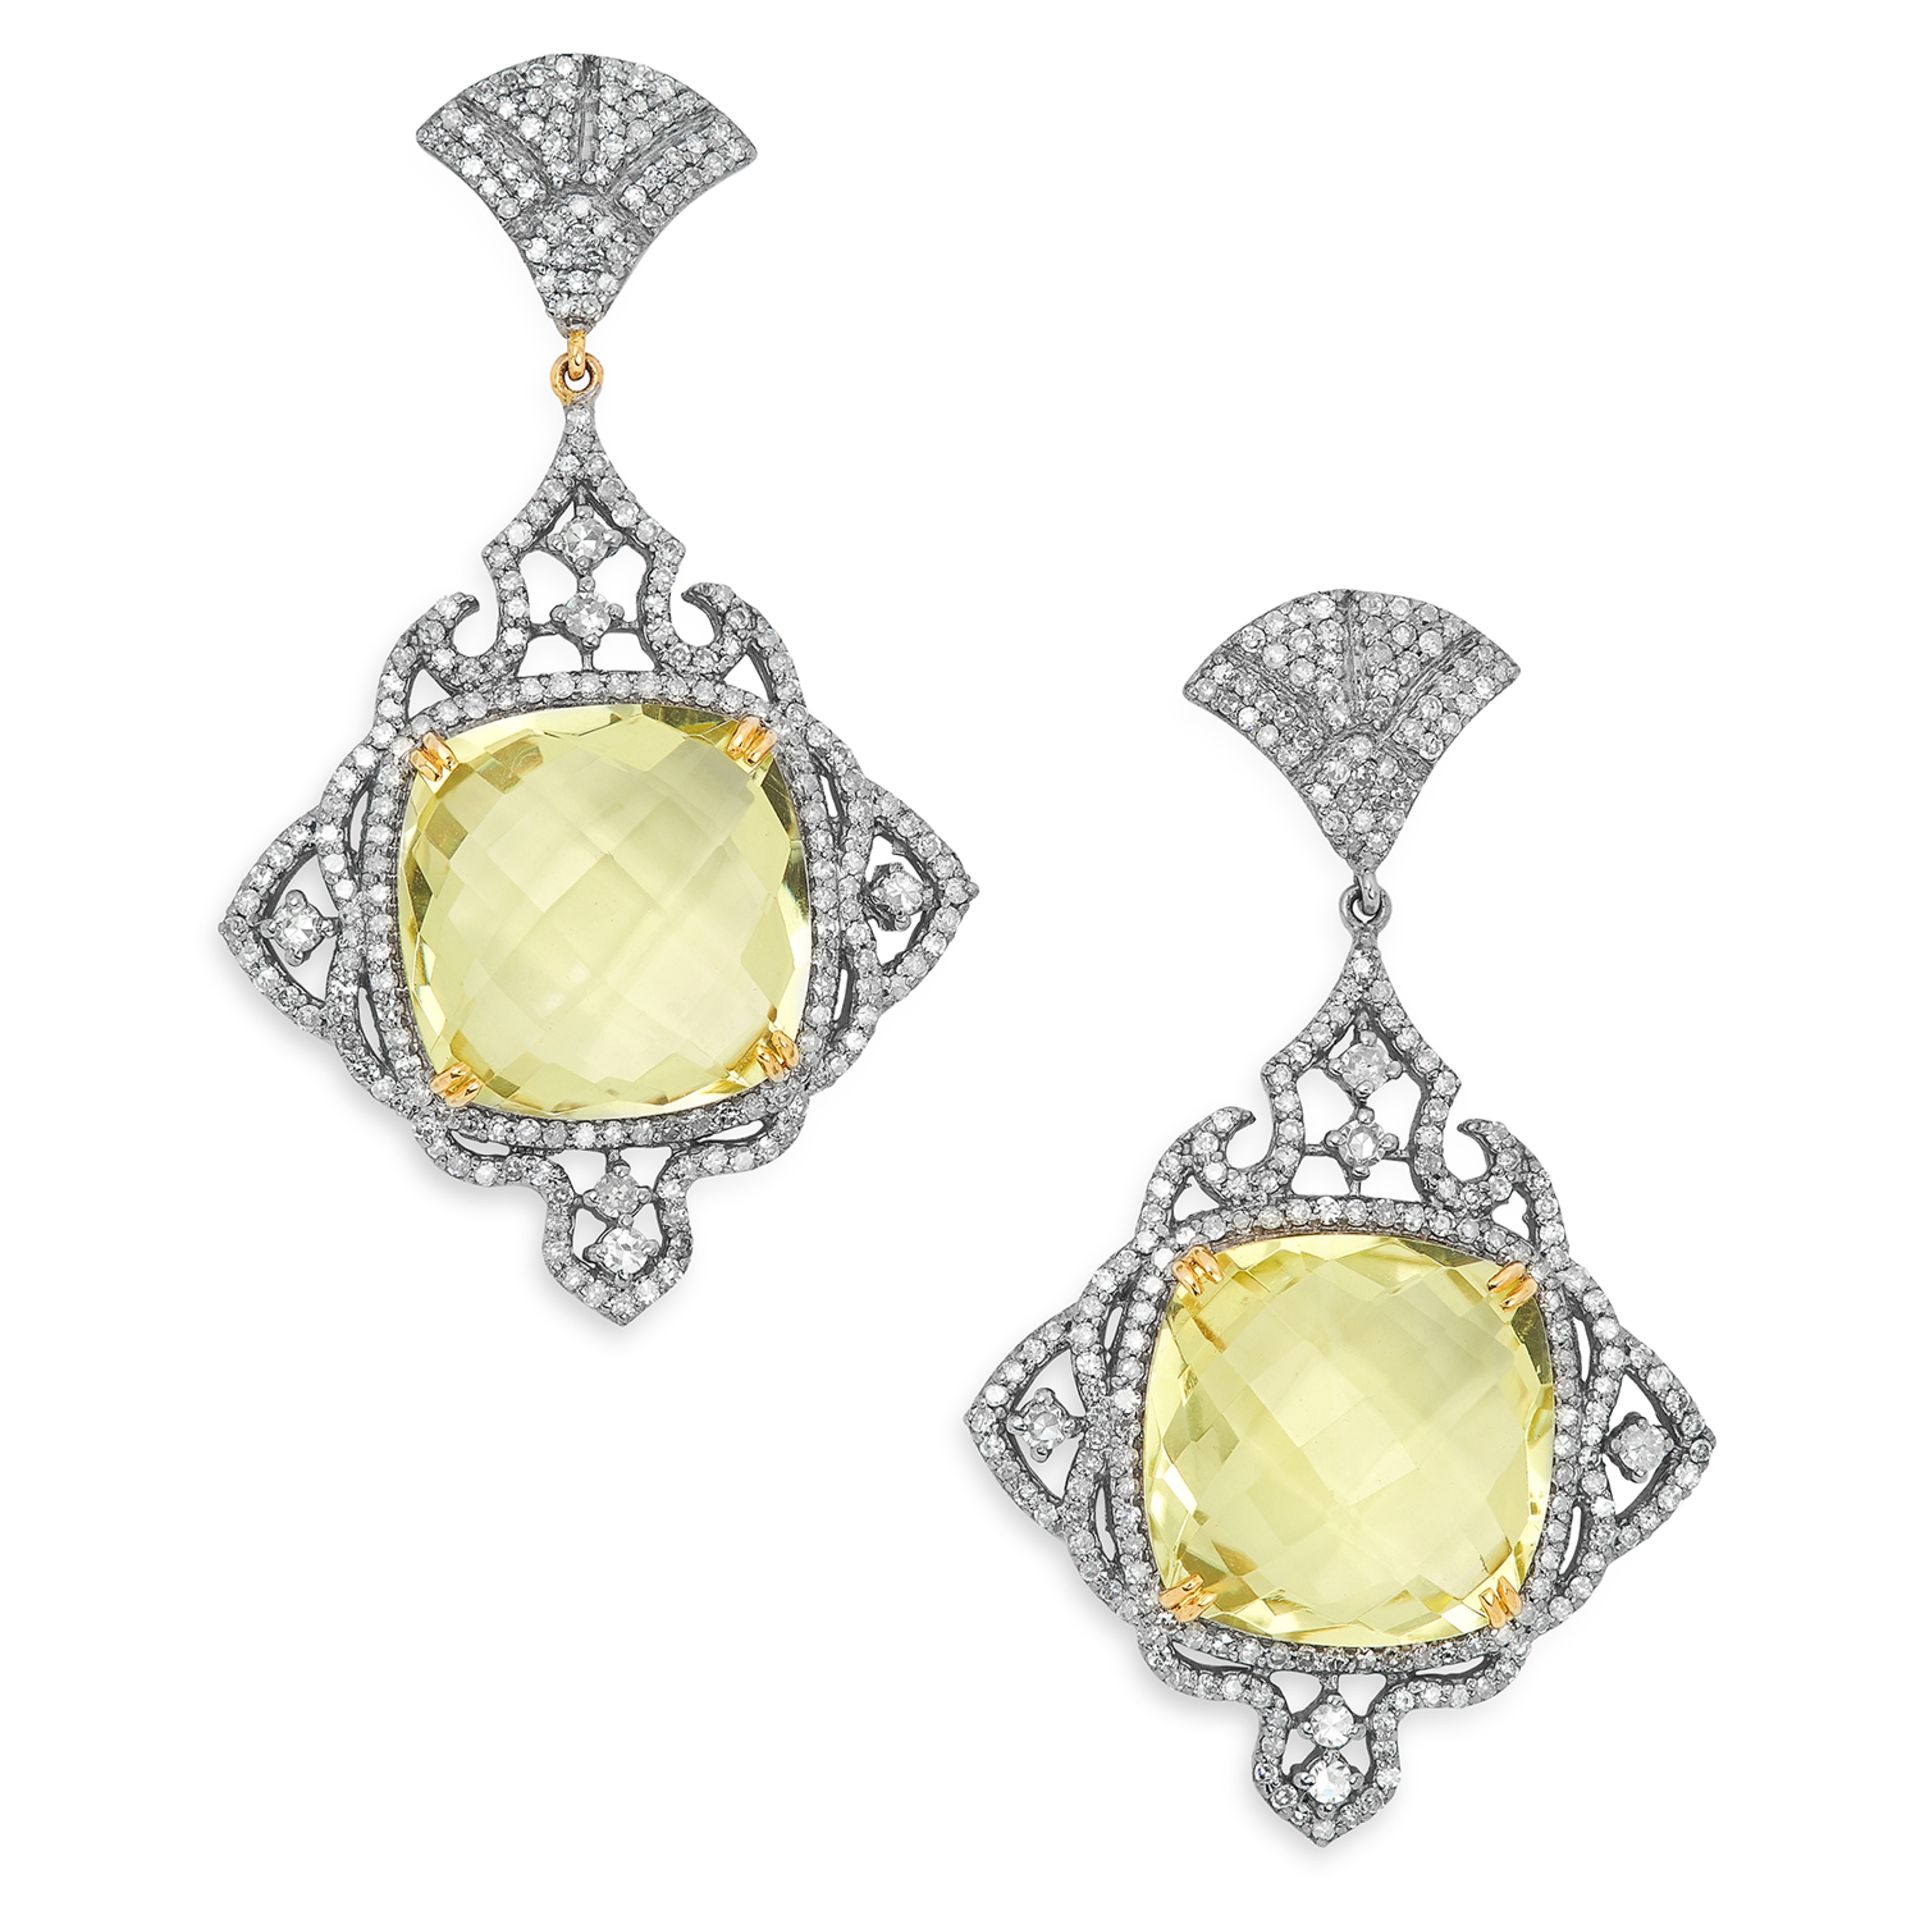 LEMON QUARTS AND DIAMOND EARRINGS each set with a faceted lemon quartz in a border of round cut